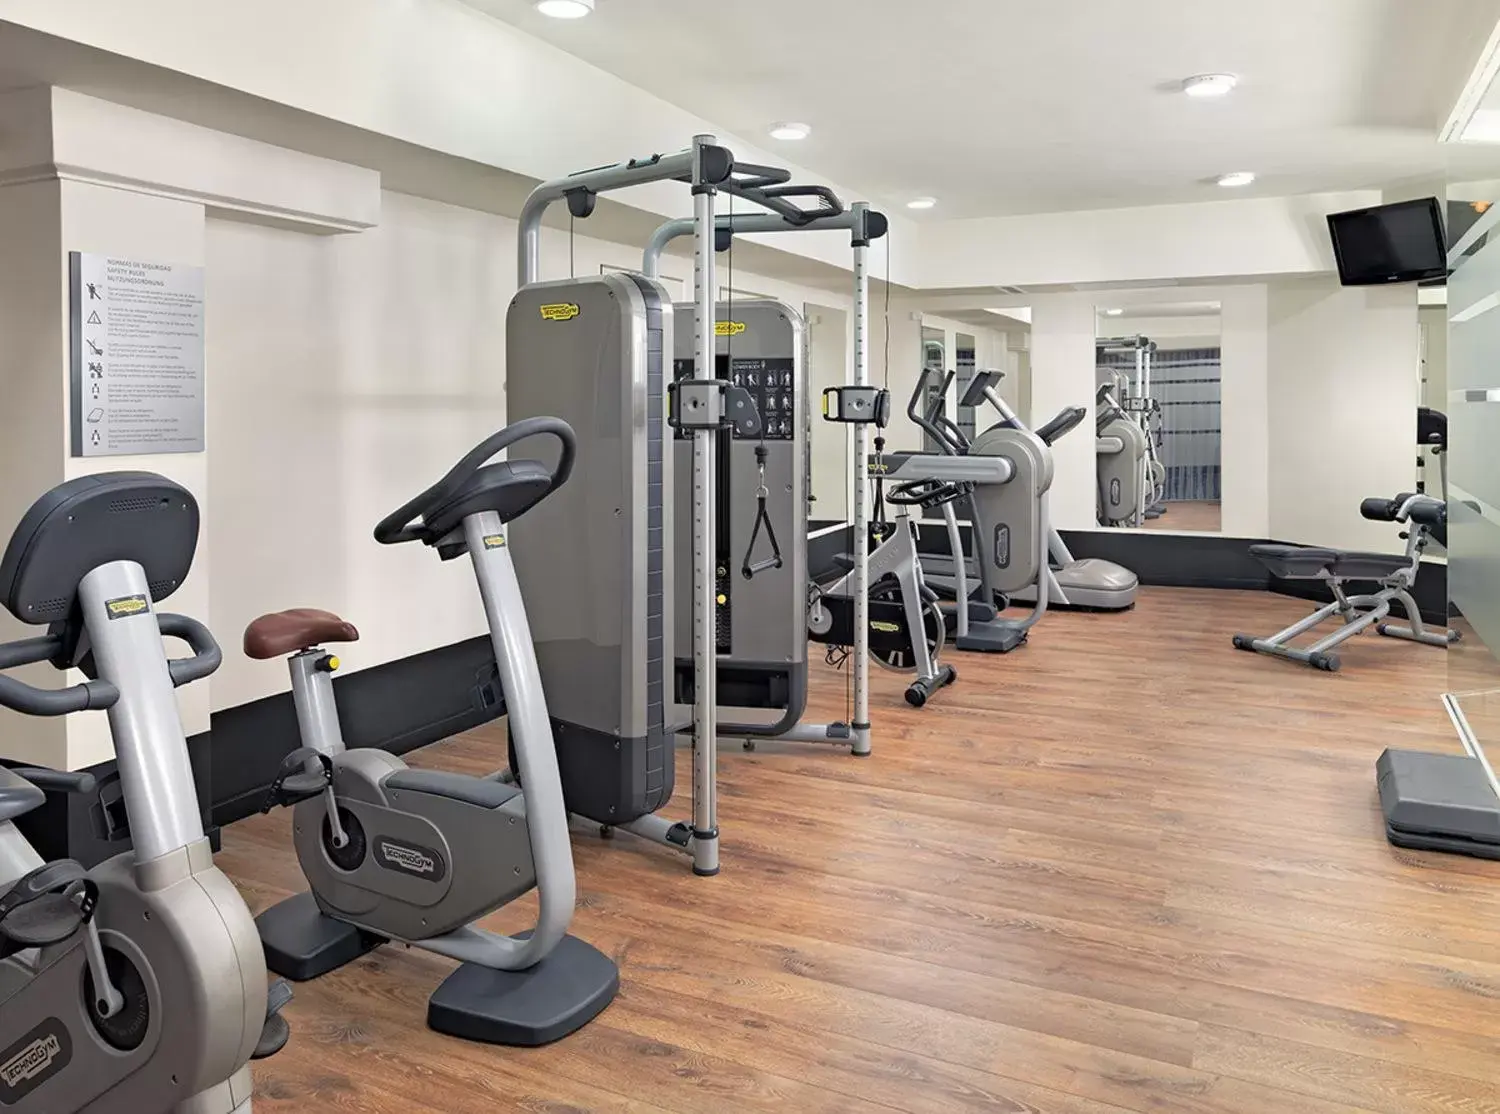 Fitness centre/facilities, Fitness Center/Facilities in H10 Las Palmeras